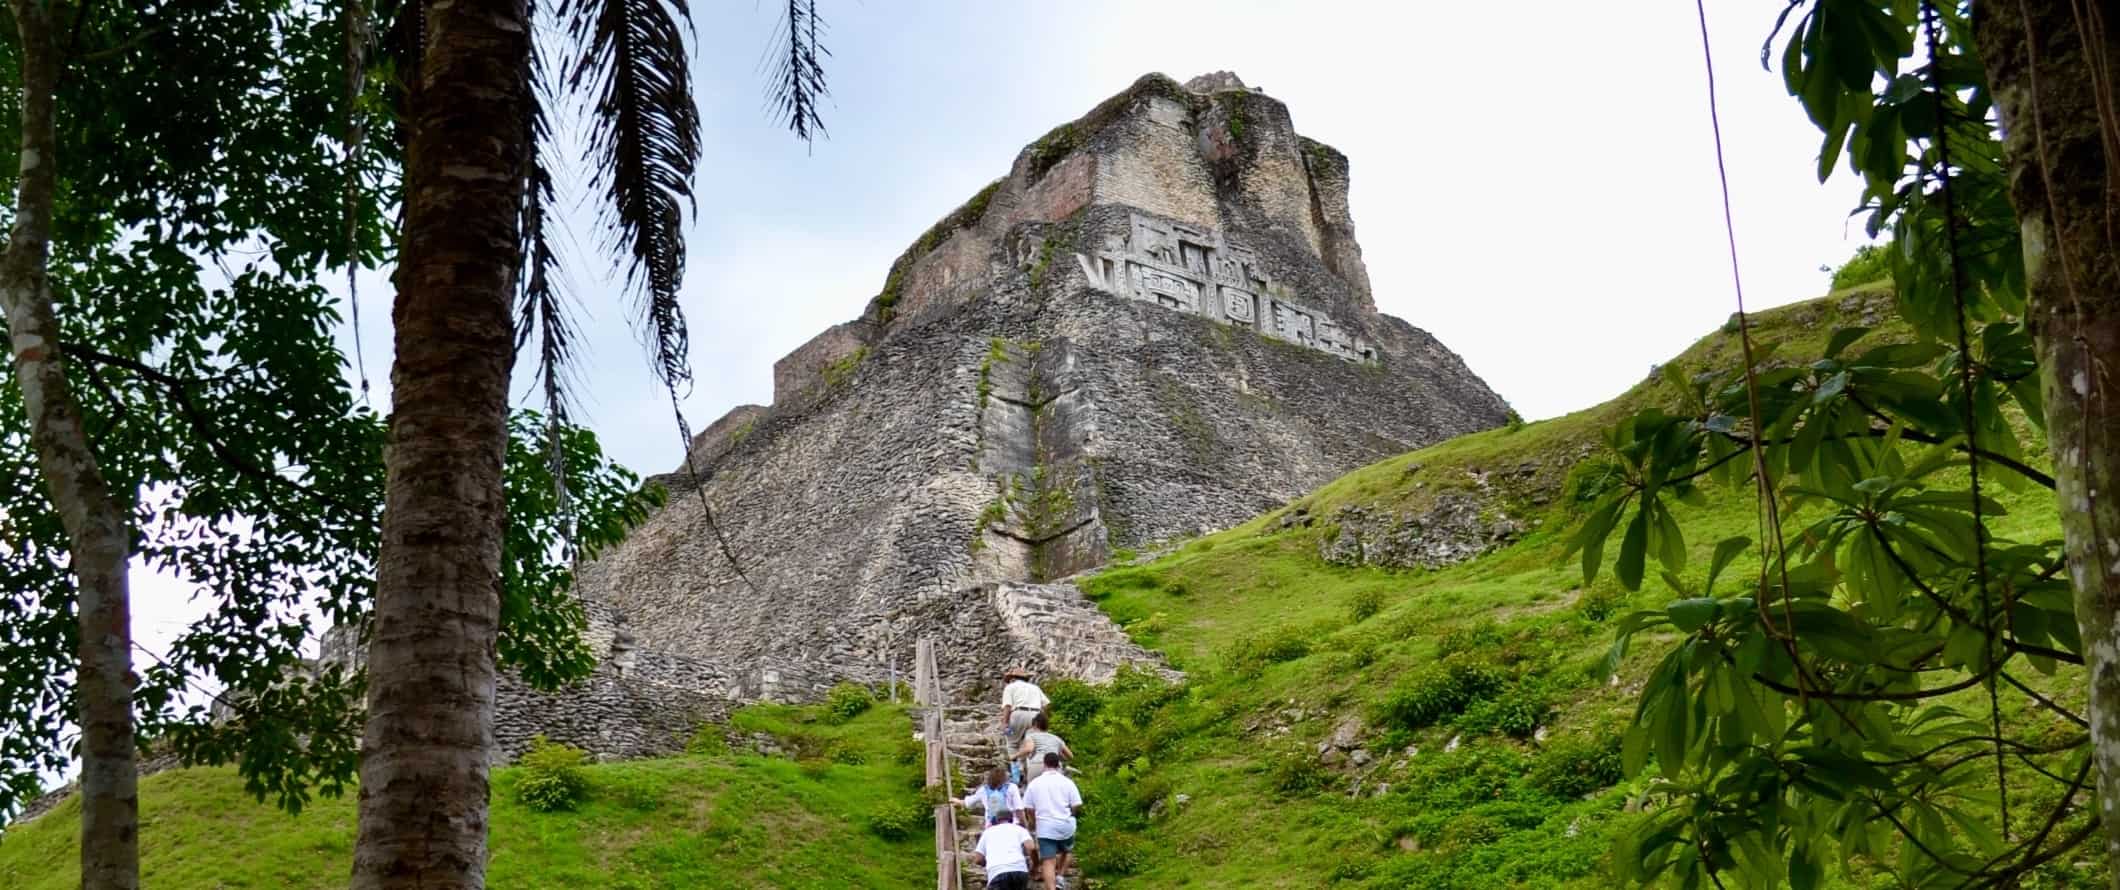 People walking up steep stairs heading up to Xunantunich, Mayan ruins in San Ignacio, Belize